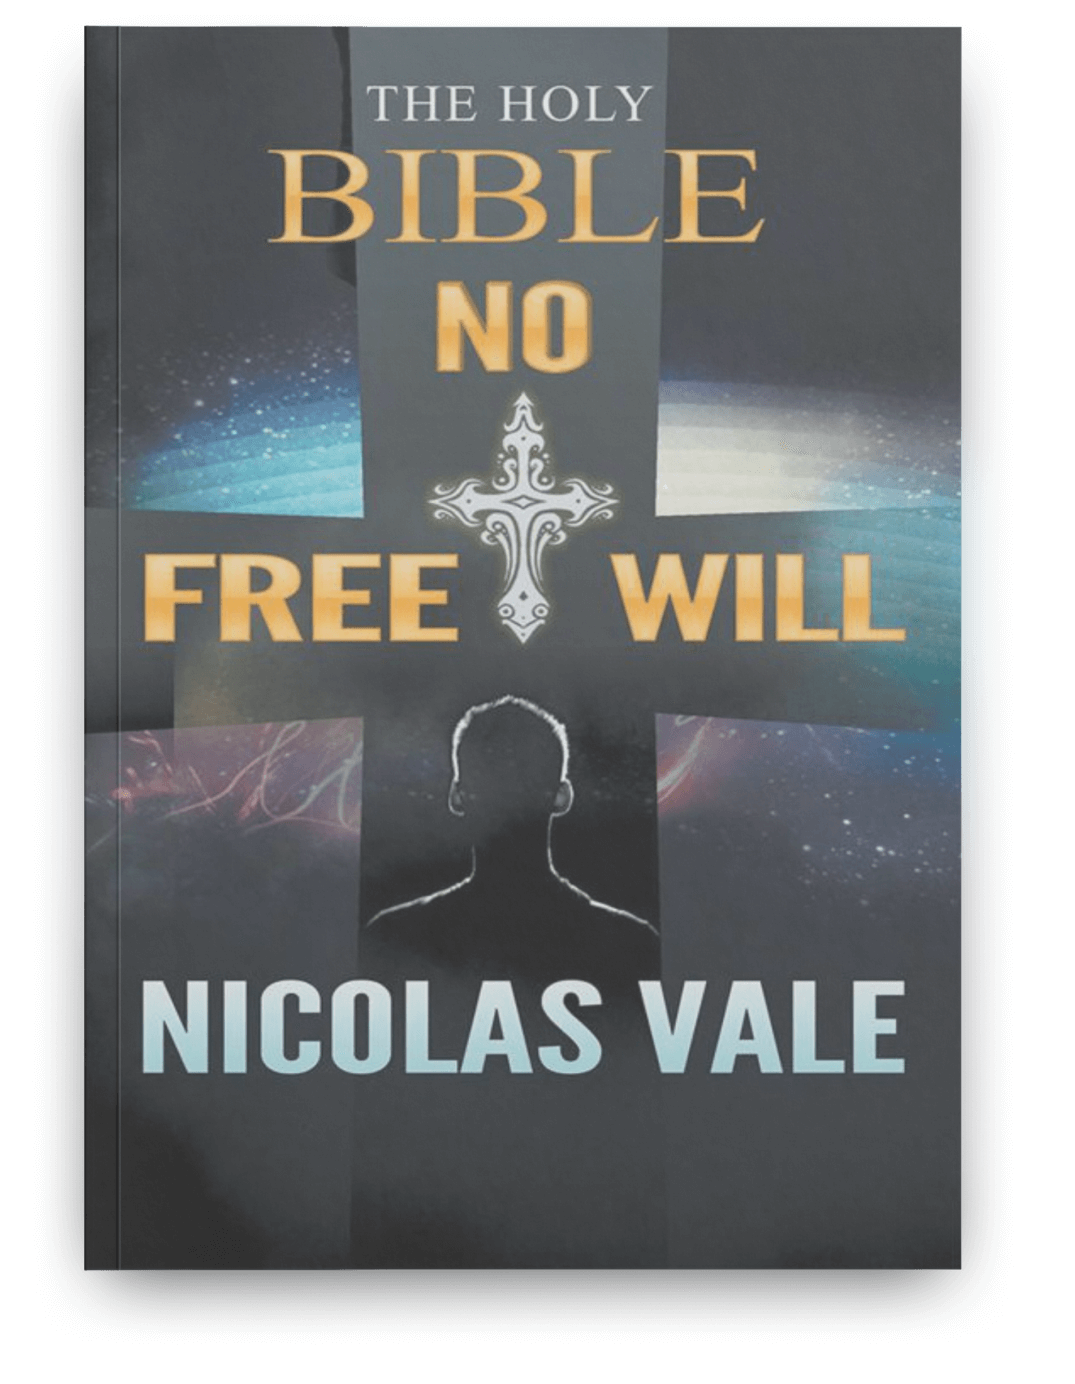 No Free Will Book Cover Mockup